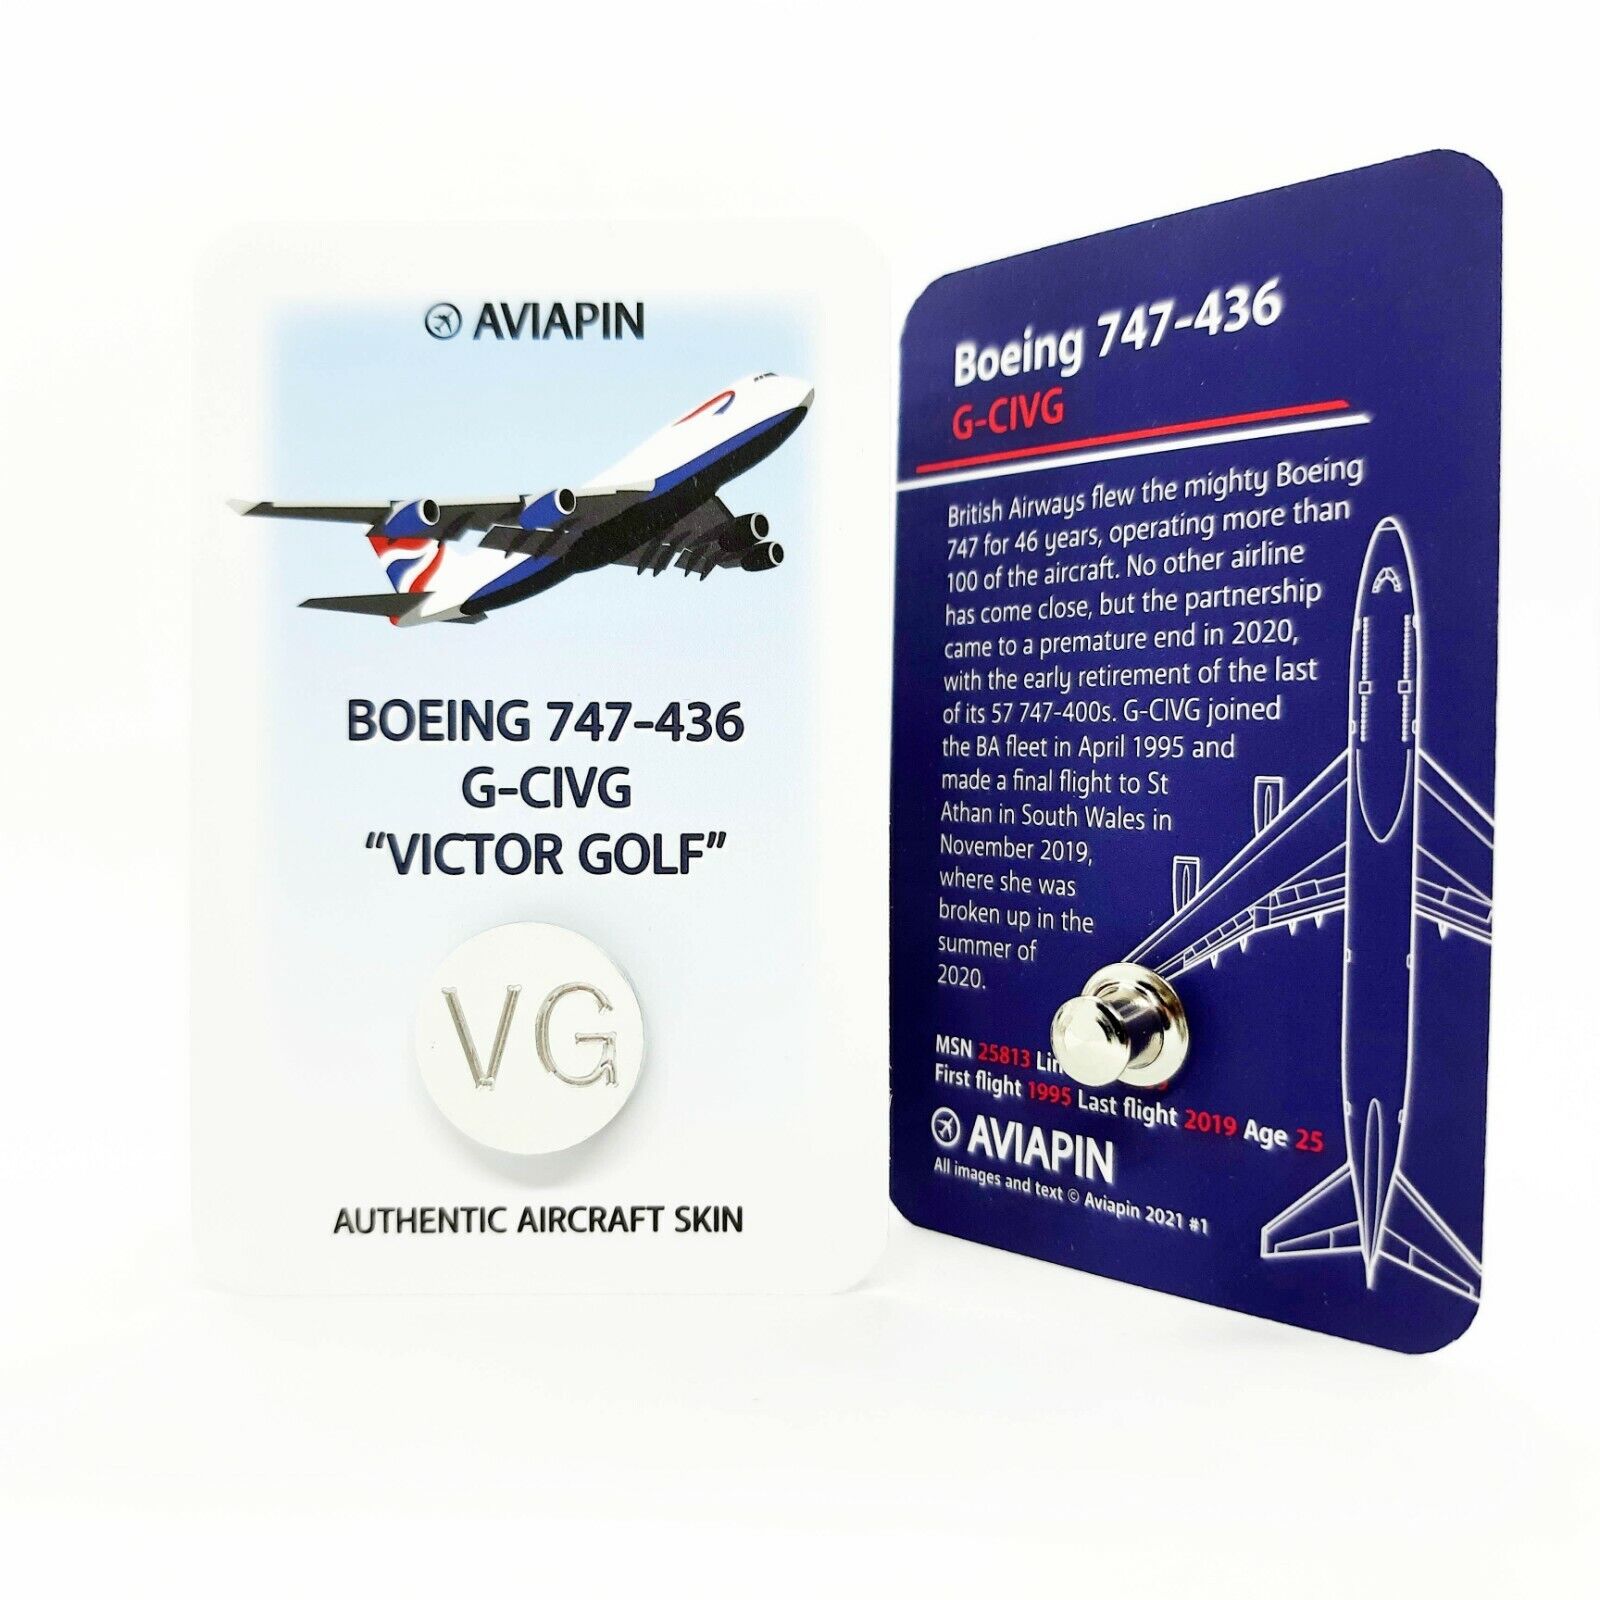 Aviapin Boeing 747-400 pin badge G-CIVG British Airways WHITE aircraft skin